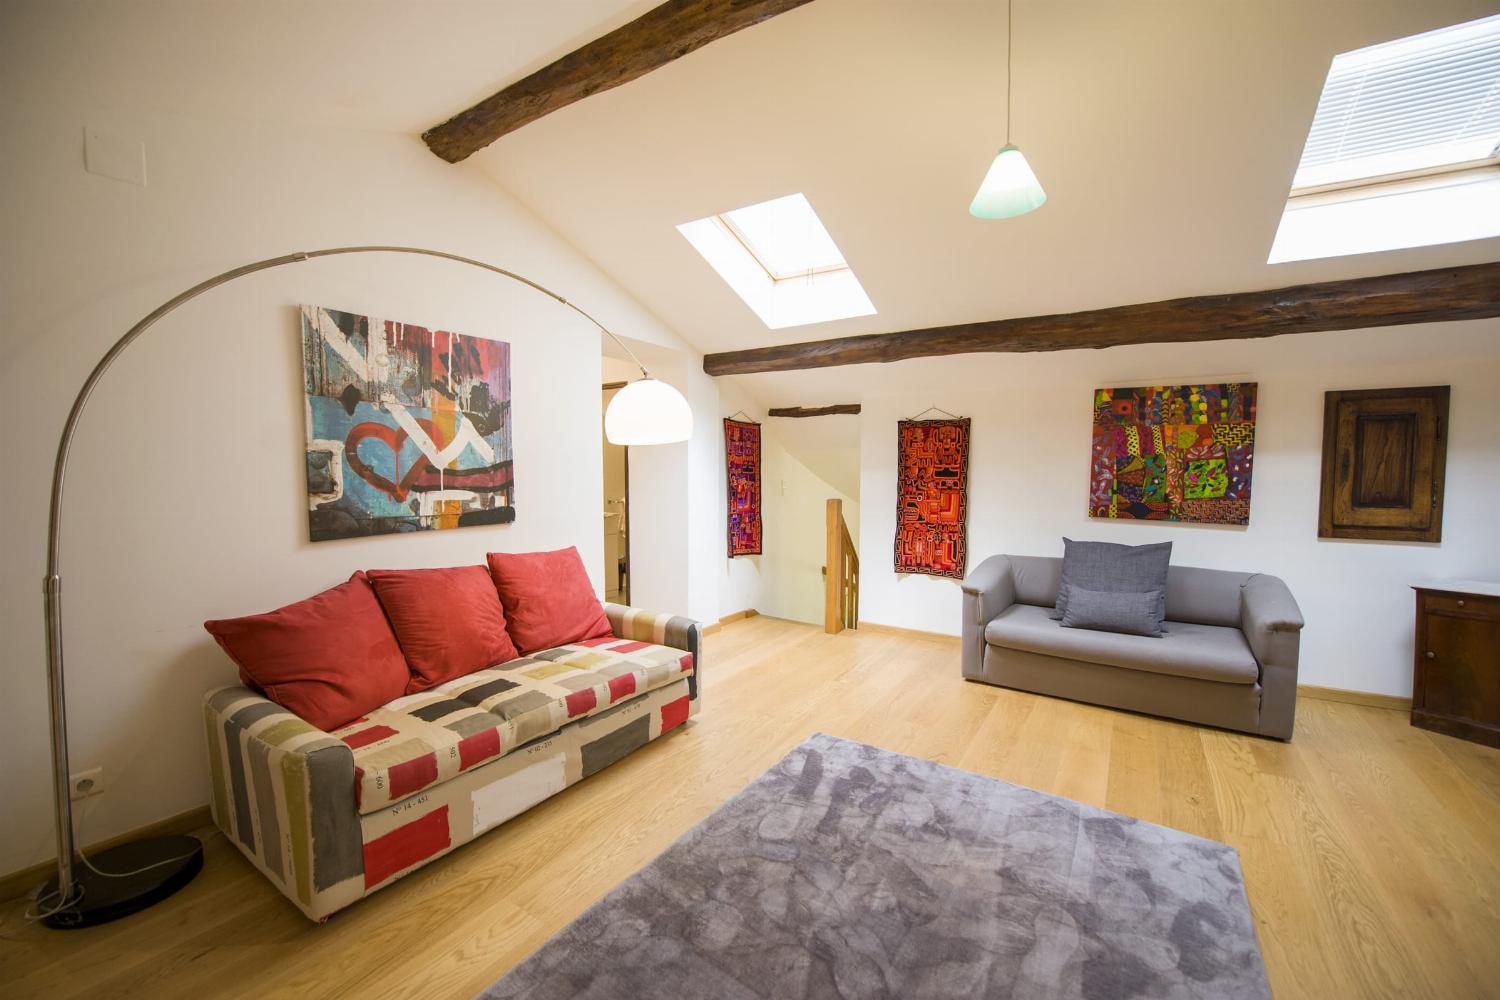 Living room | Rental home in Haute-Garonne